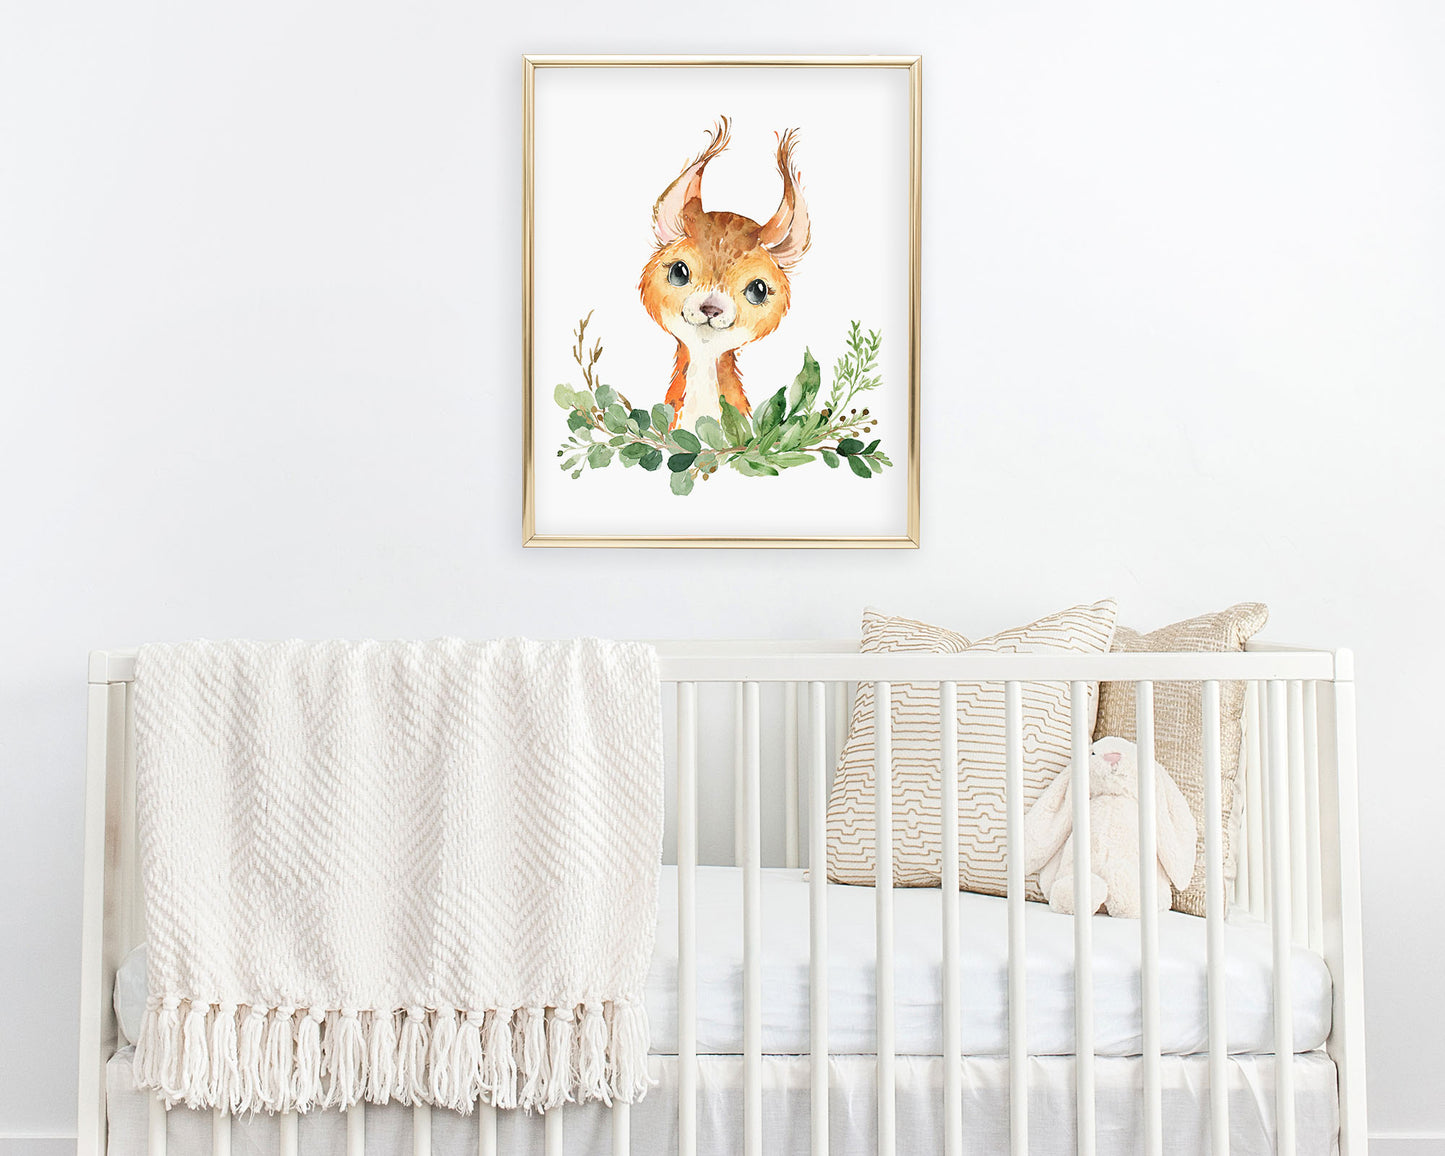 Watercolor Squirrel Woodland Greenery Printable Wall Art, Digital Download